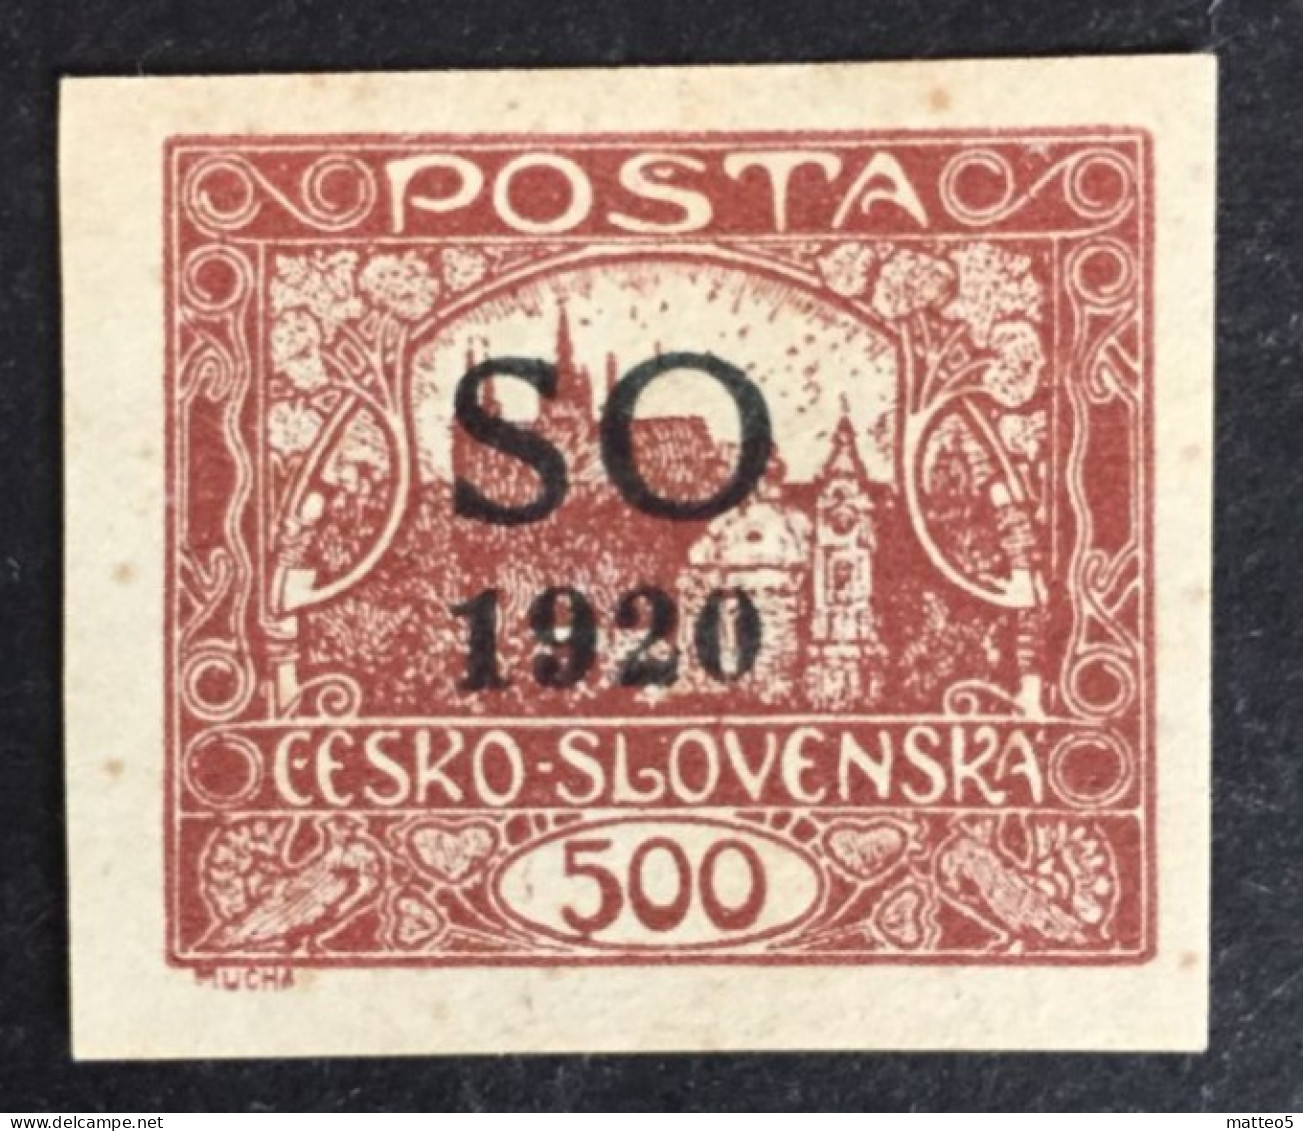 1920 Poland Eastern Silesia Czechoslovakia - Hradcany At Prague Overprint SO 500 - Unused ( Mint Hinged) - Silezië